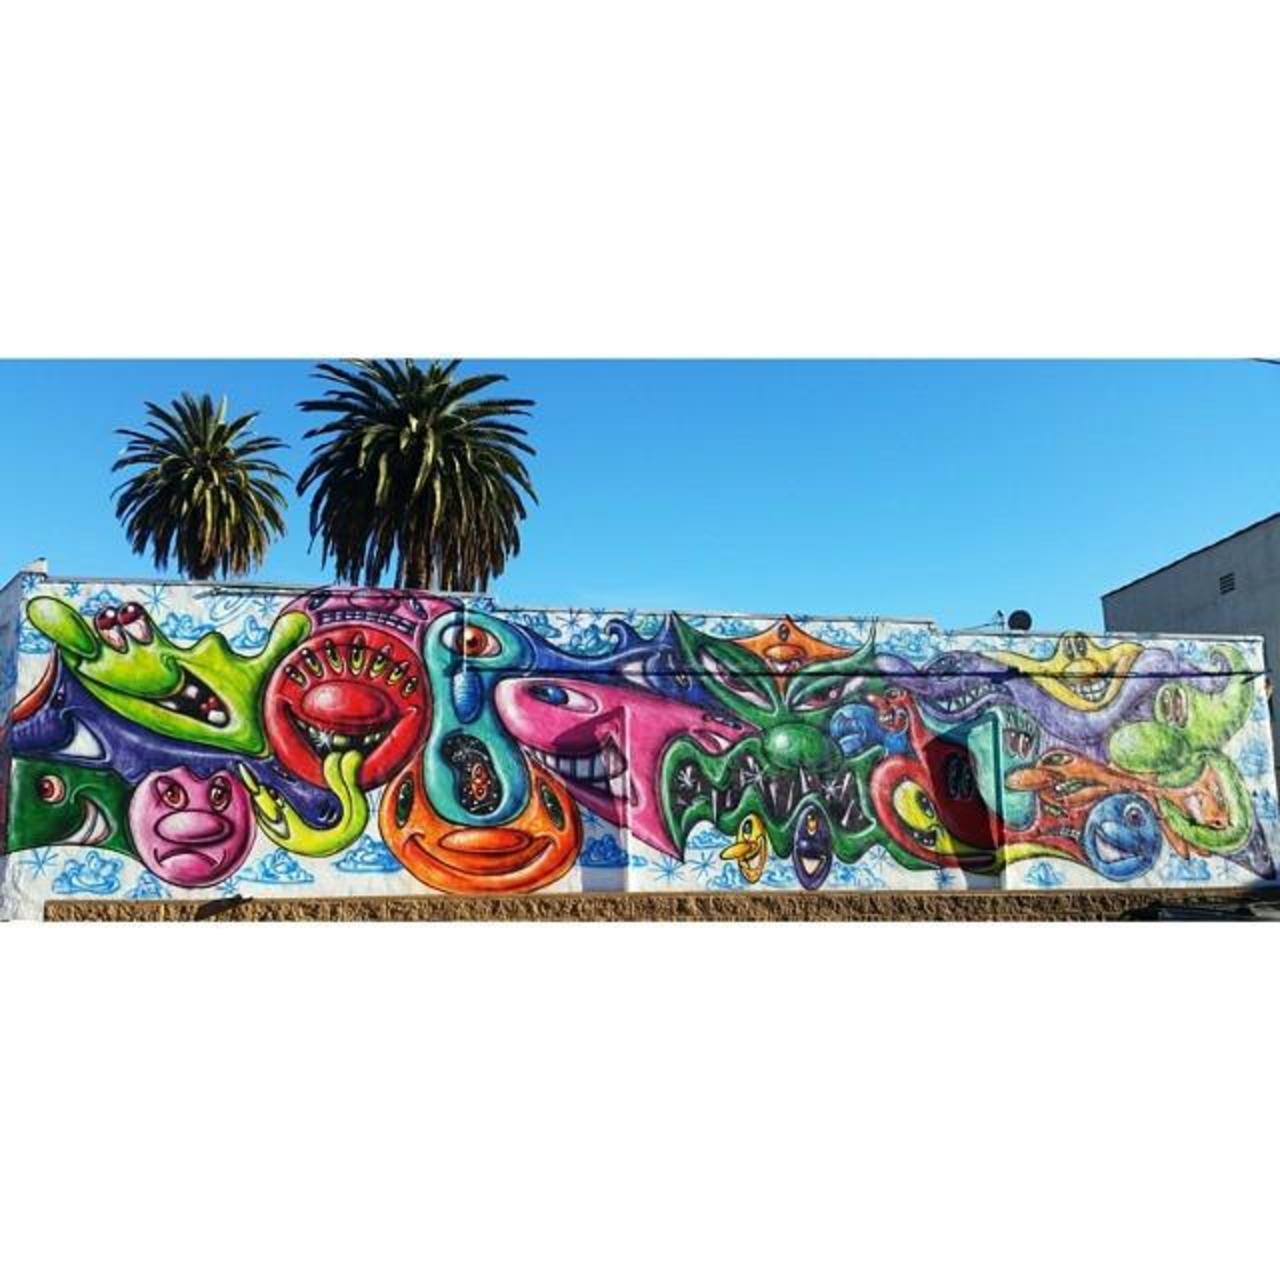 Funny Monsters on Adams Blvd #streetart #graffiti #streetartLA #UrbanLandscape #PalmTrees #mural by @kennyscharf #K… http://t.co/hEljU4vIas